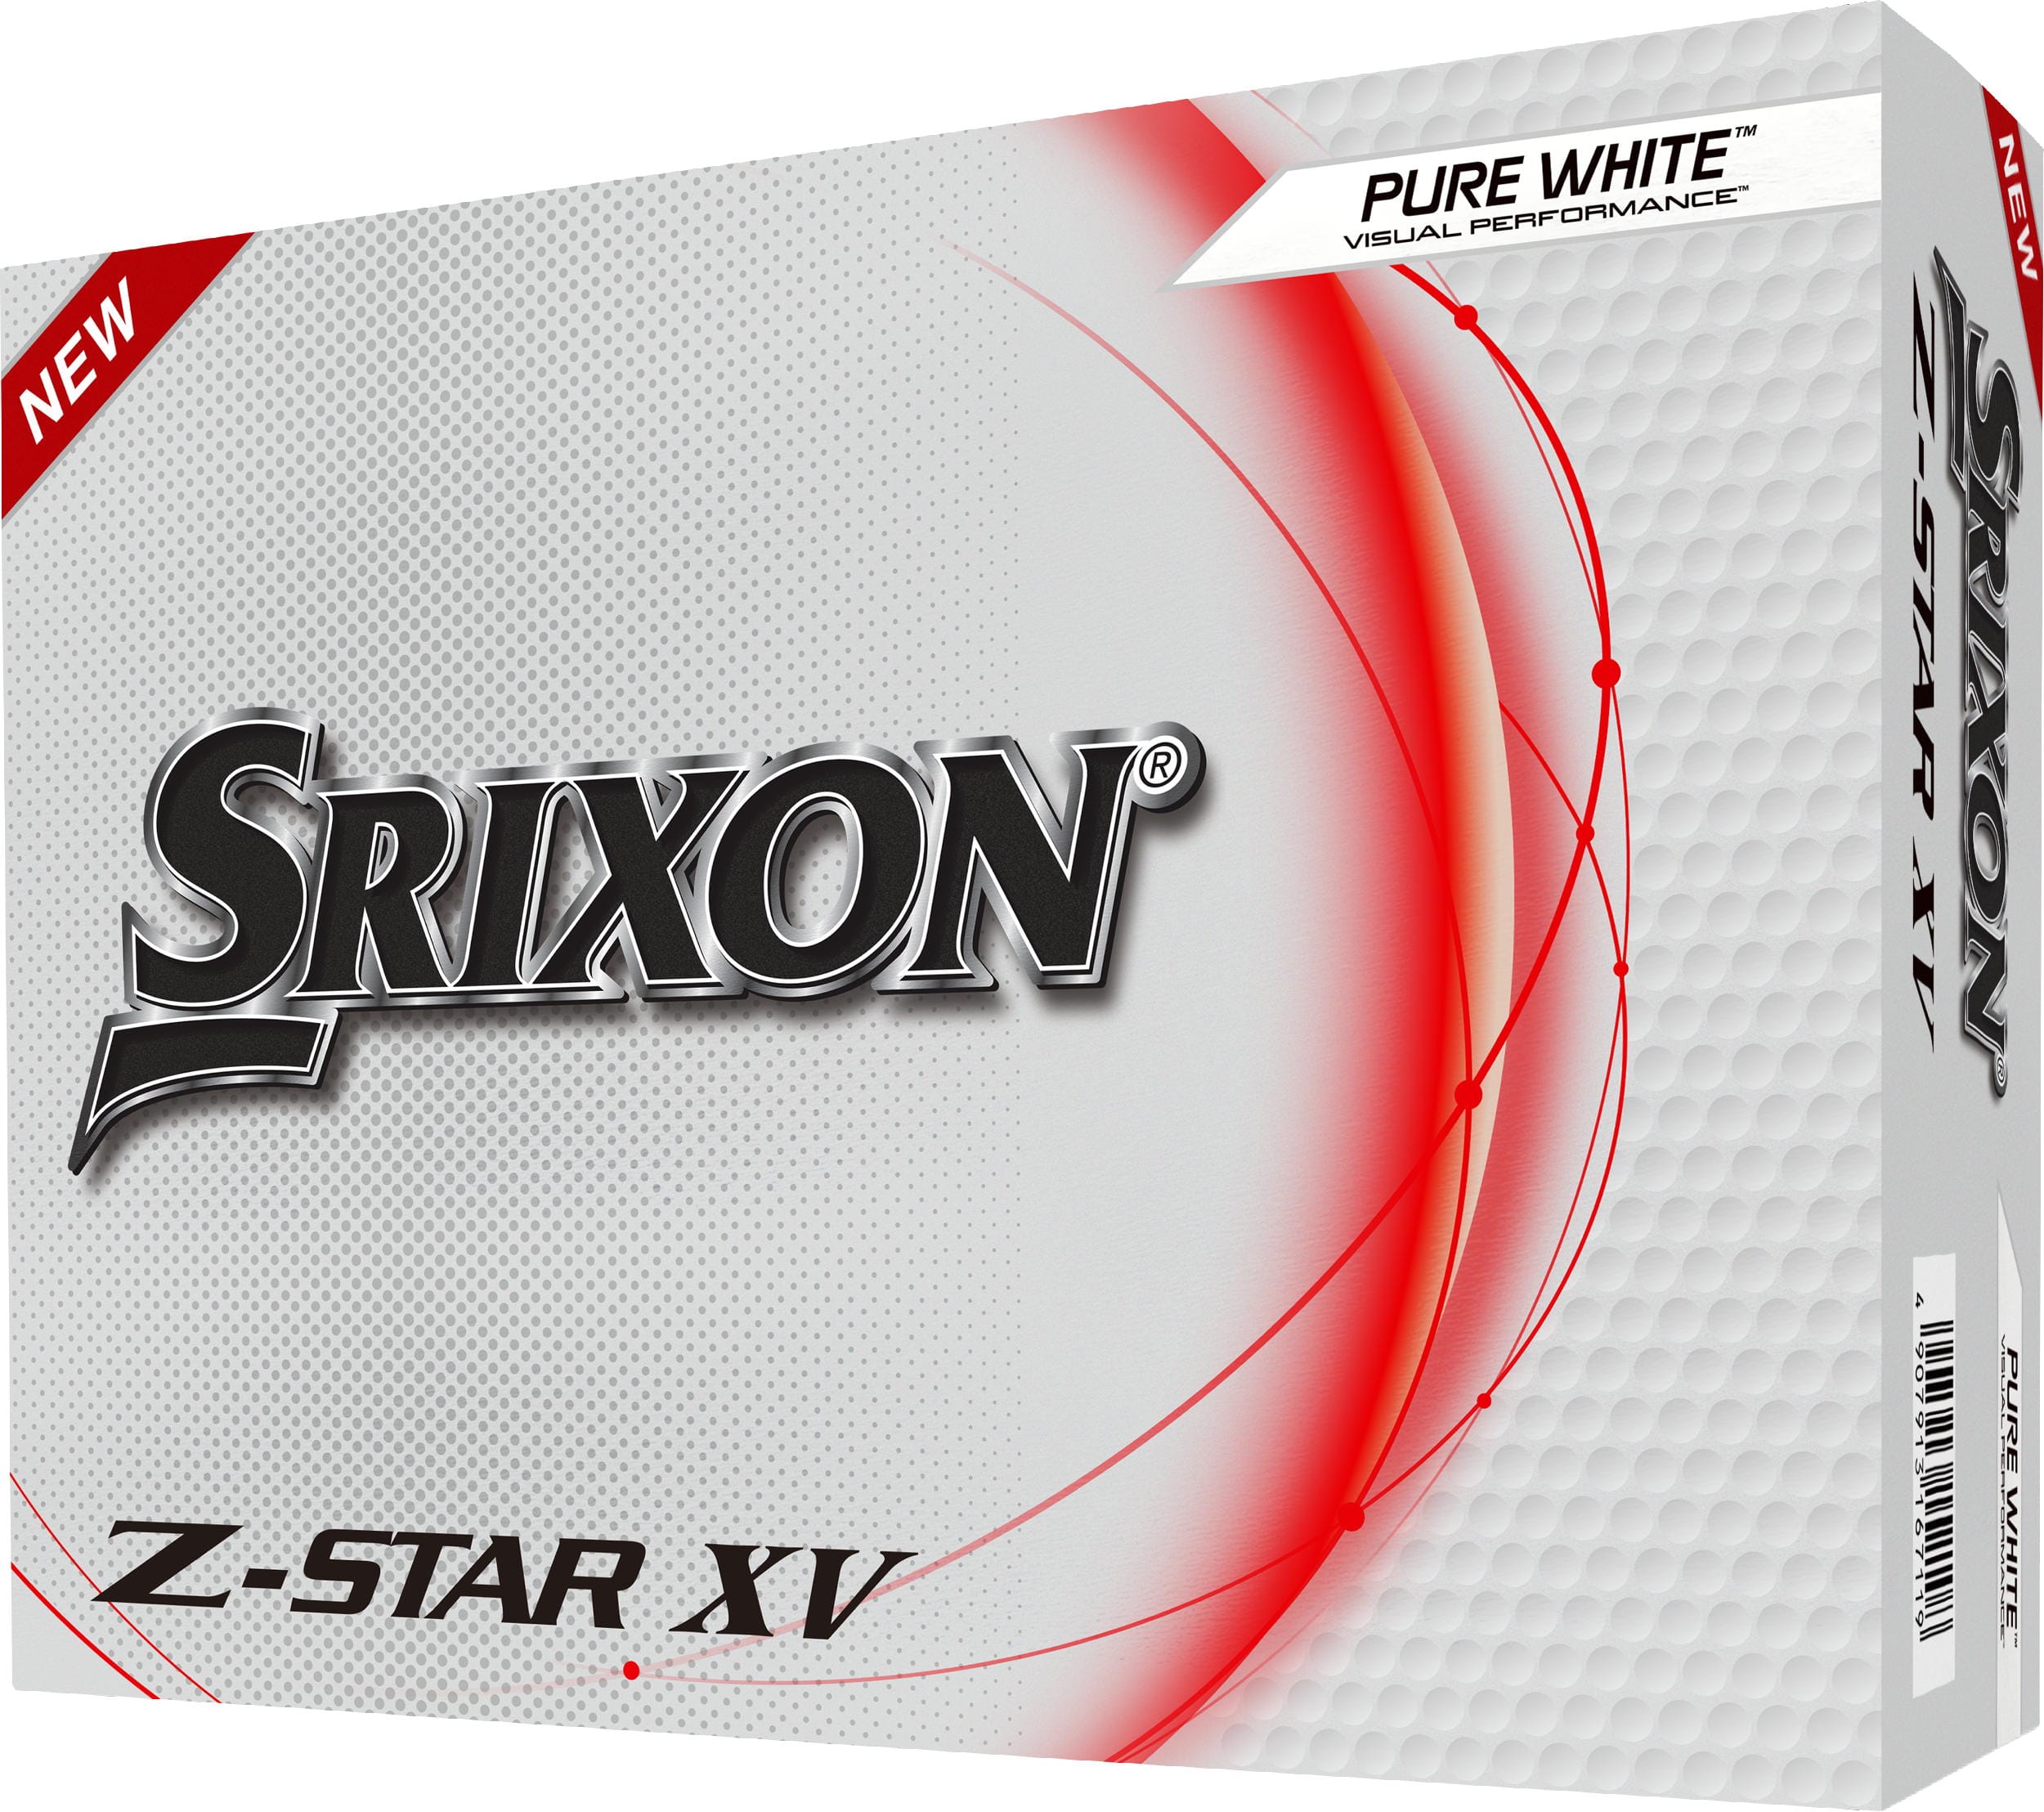 Srixon Z-STAR-XV Pure white Golfbälle